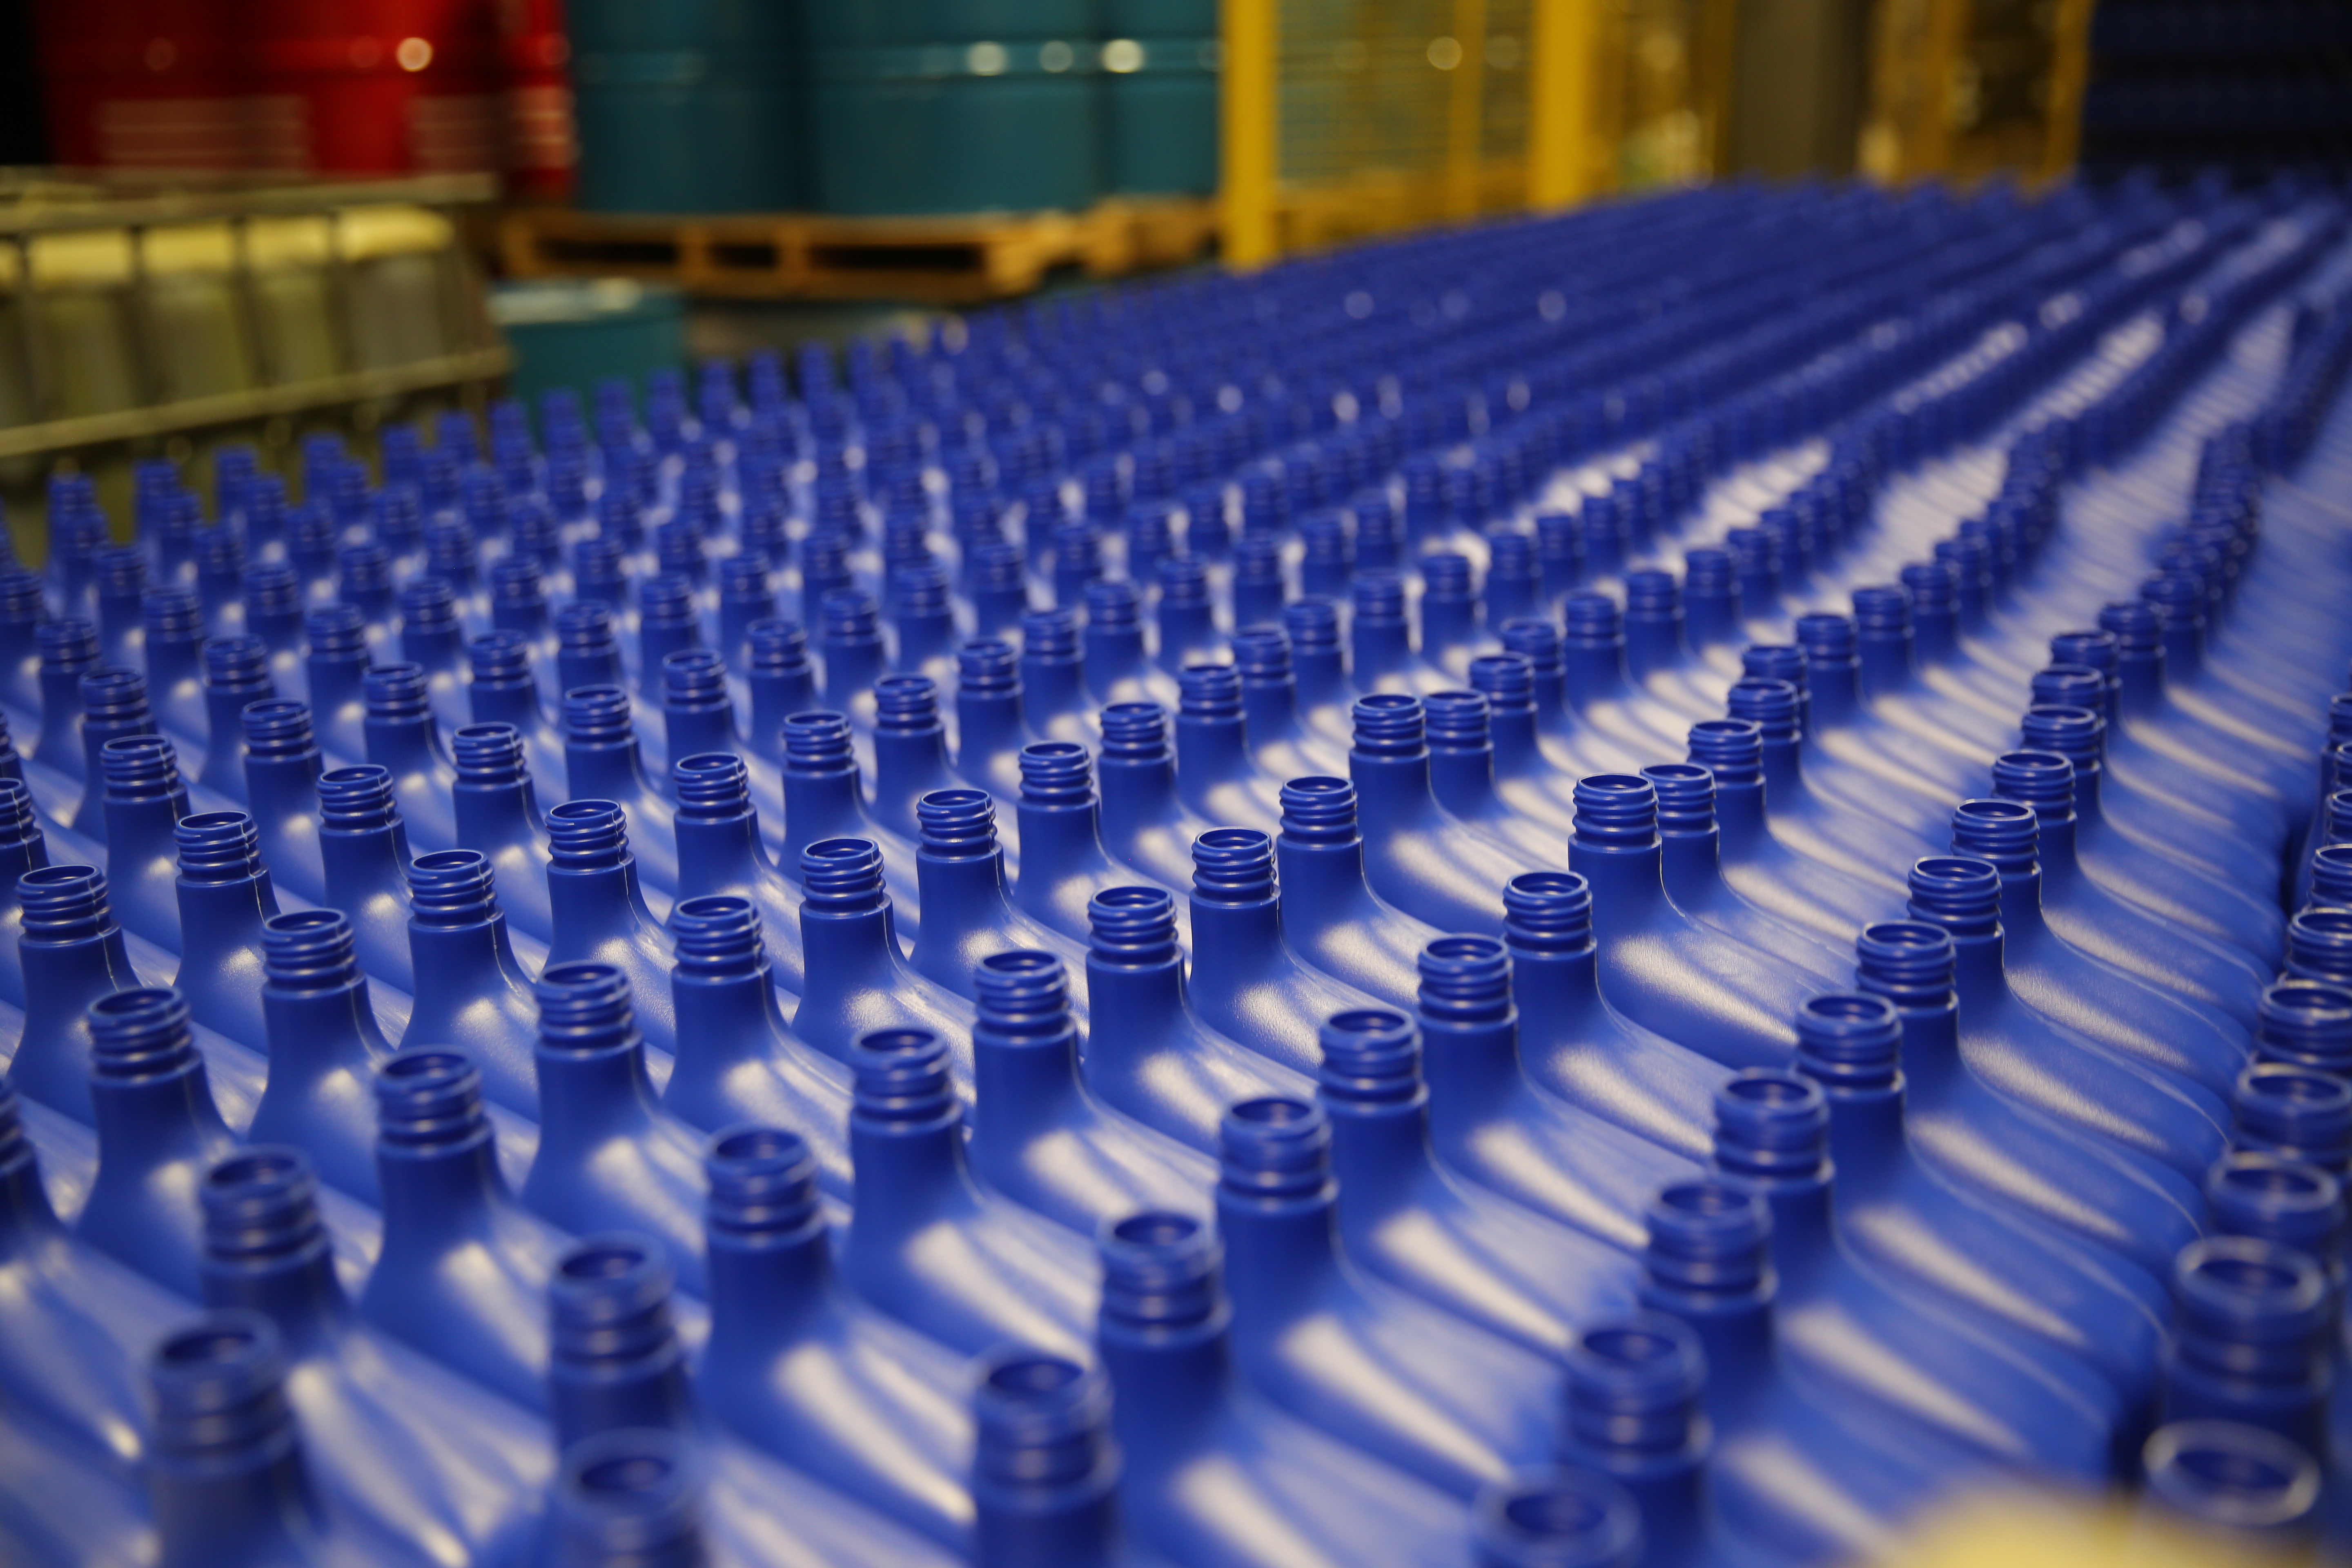 Sunoco Lubricants blue bottles